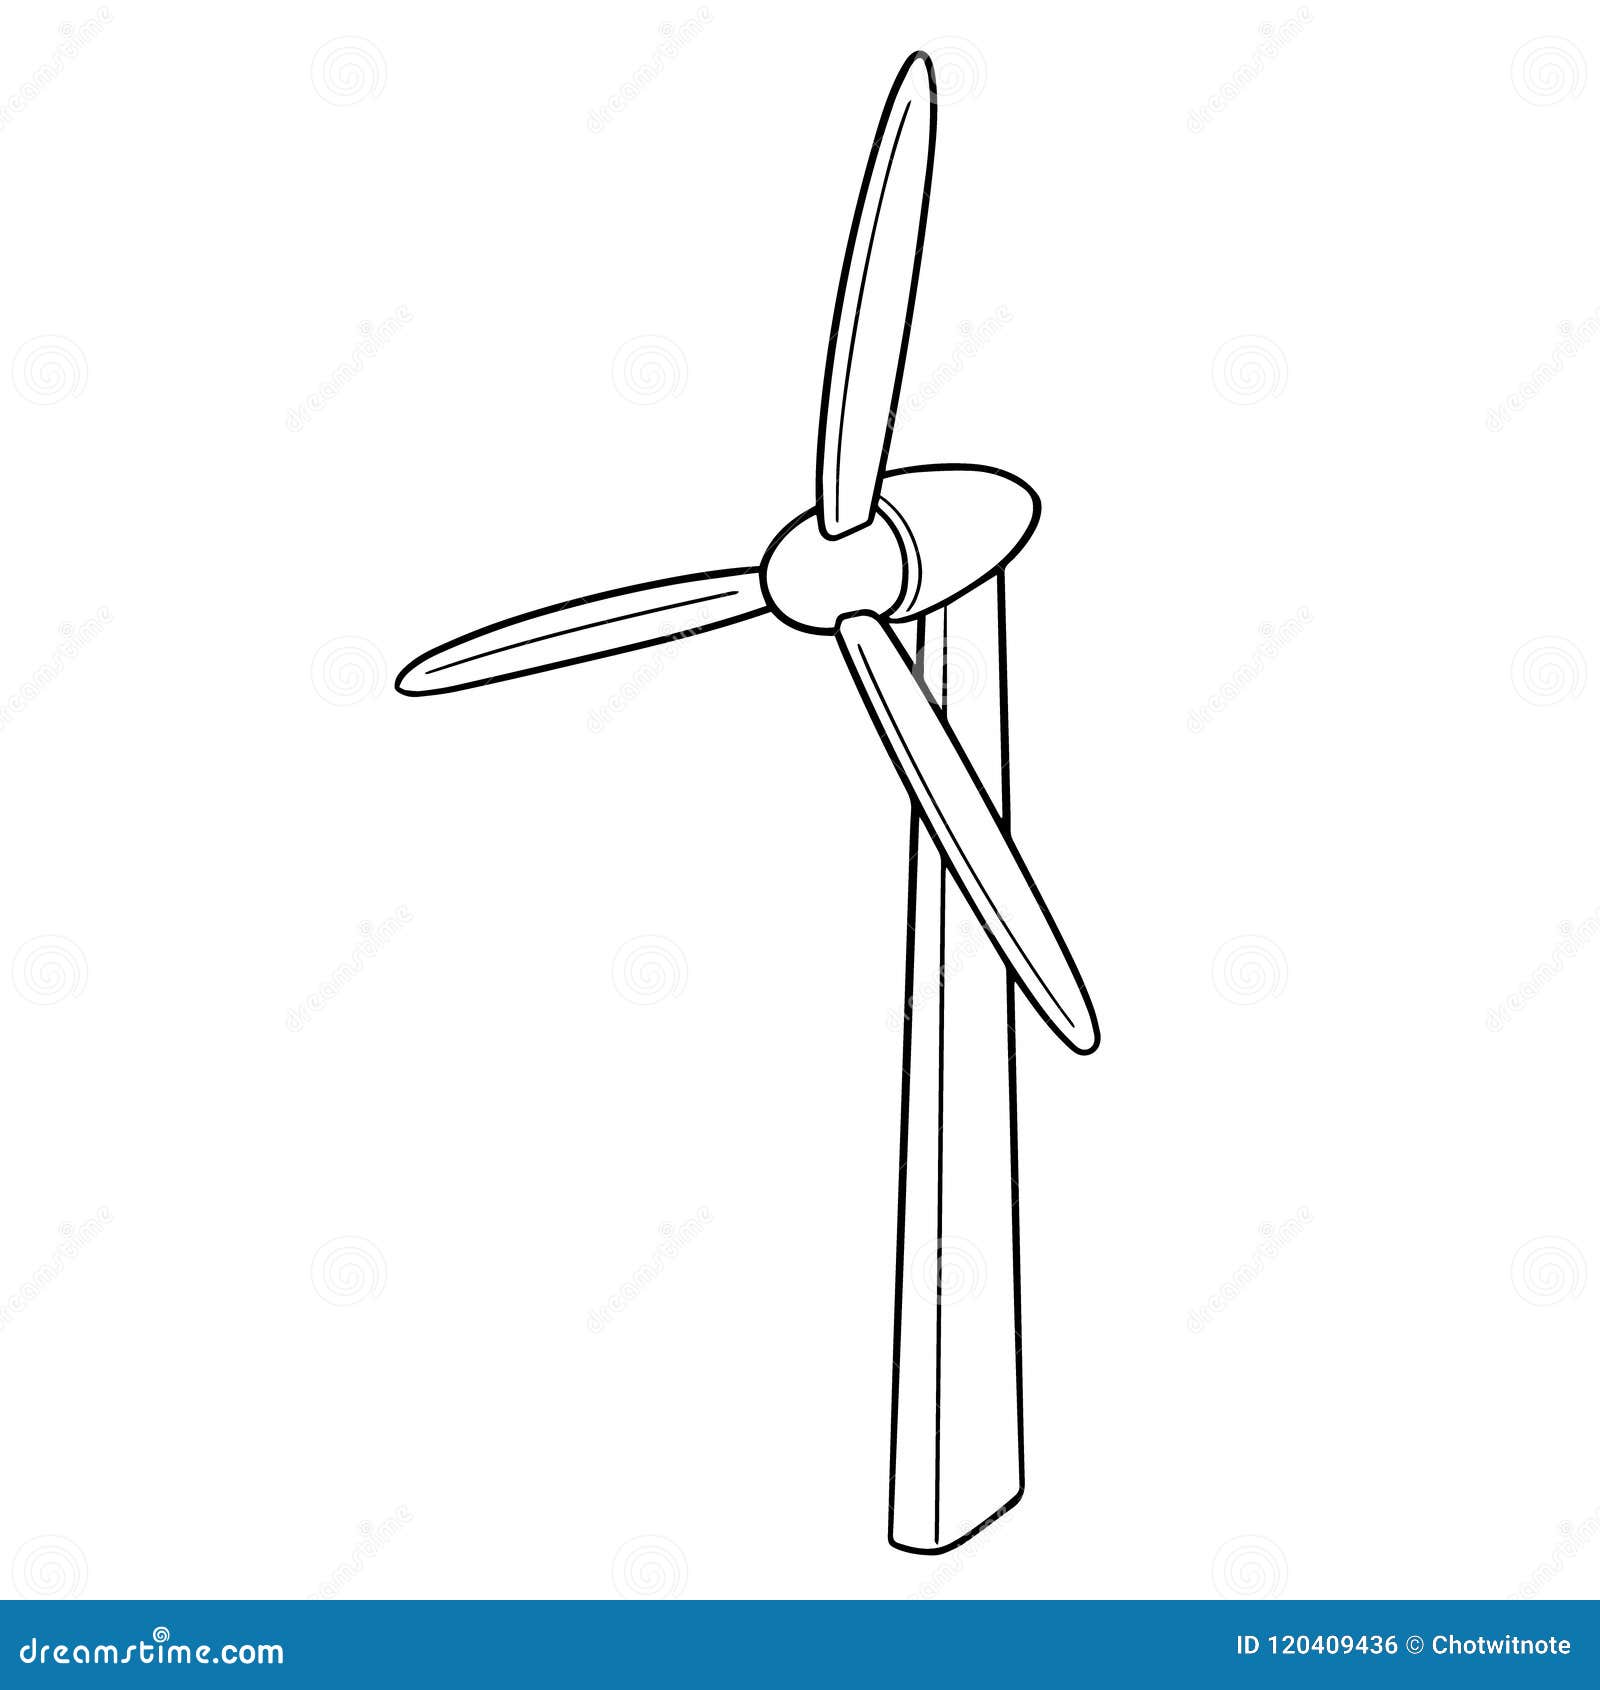 Vector of wind turbine stock vector. Illustration of decoration - 120409436